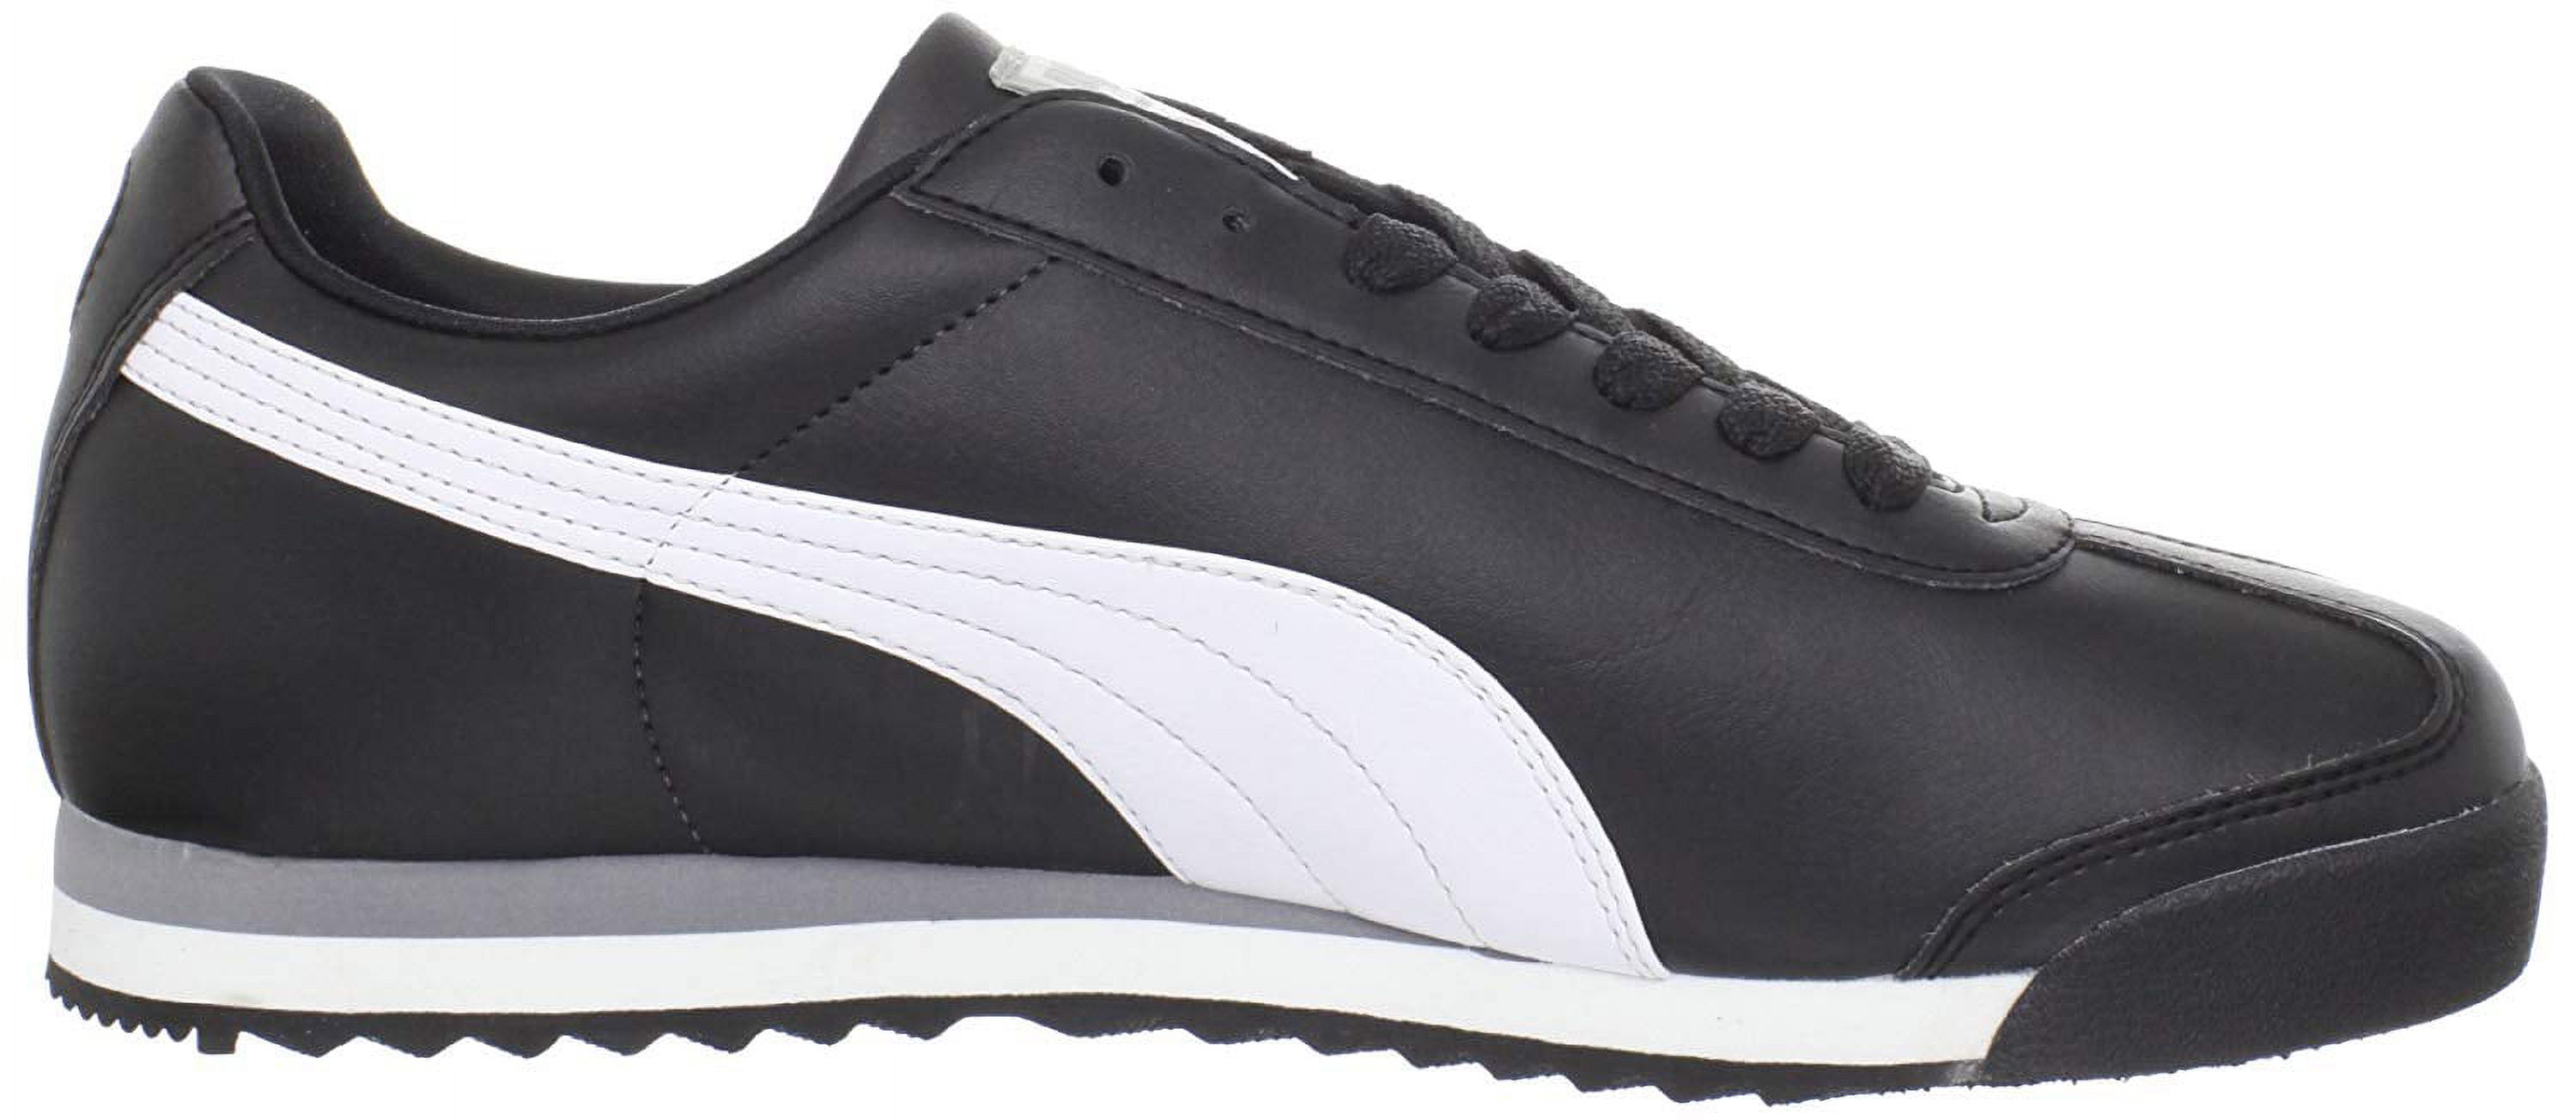 Puma Roma Basic Men's Shoes Black/White/Puma Sliver 353572-11 - image 3 of 7